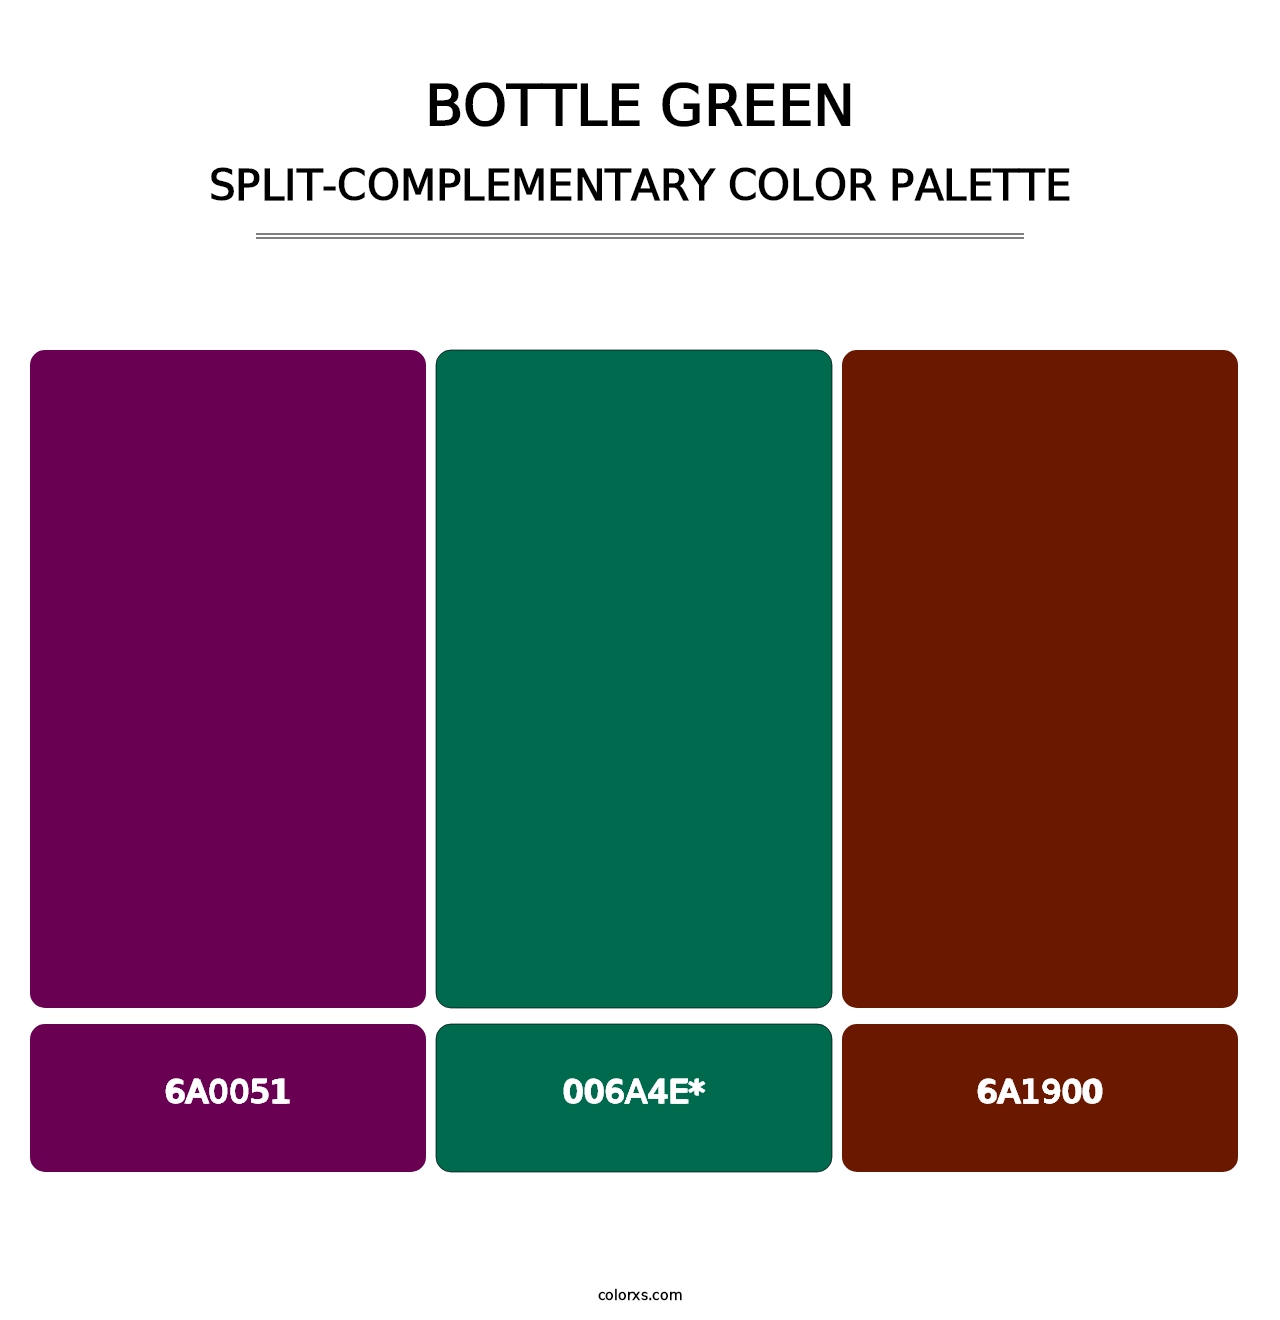 Bottle Green - Split-Complementary Color Palette